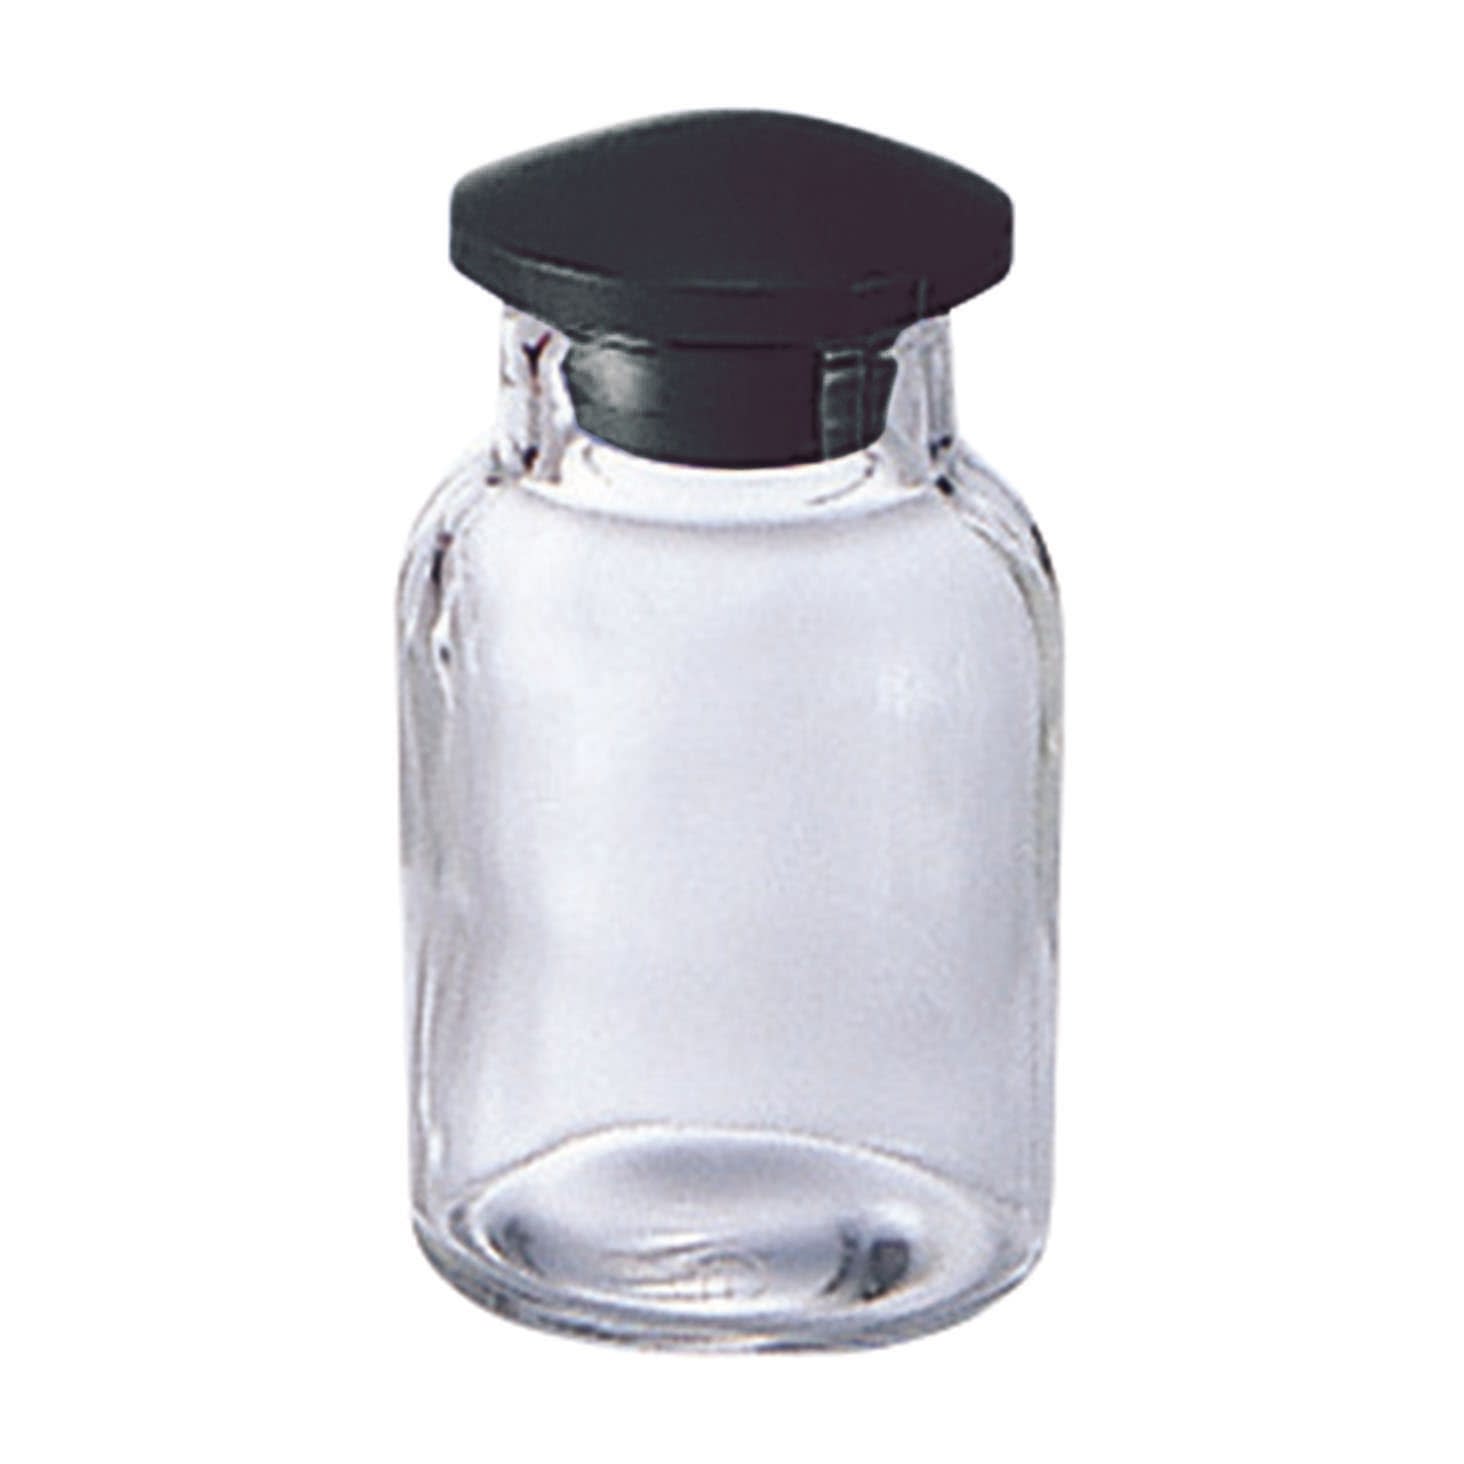 (08-2955-03)散薬瓶（畑式）透明・黒キャップ付 300CC ｻﾝﾔｸﾋﾞﾝﾄｳﾒｲｸﾛｷｬｯﾌﾟﾂｷ【1本単位】【2019年カタログ商品】